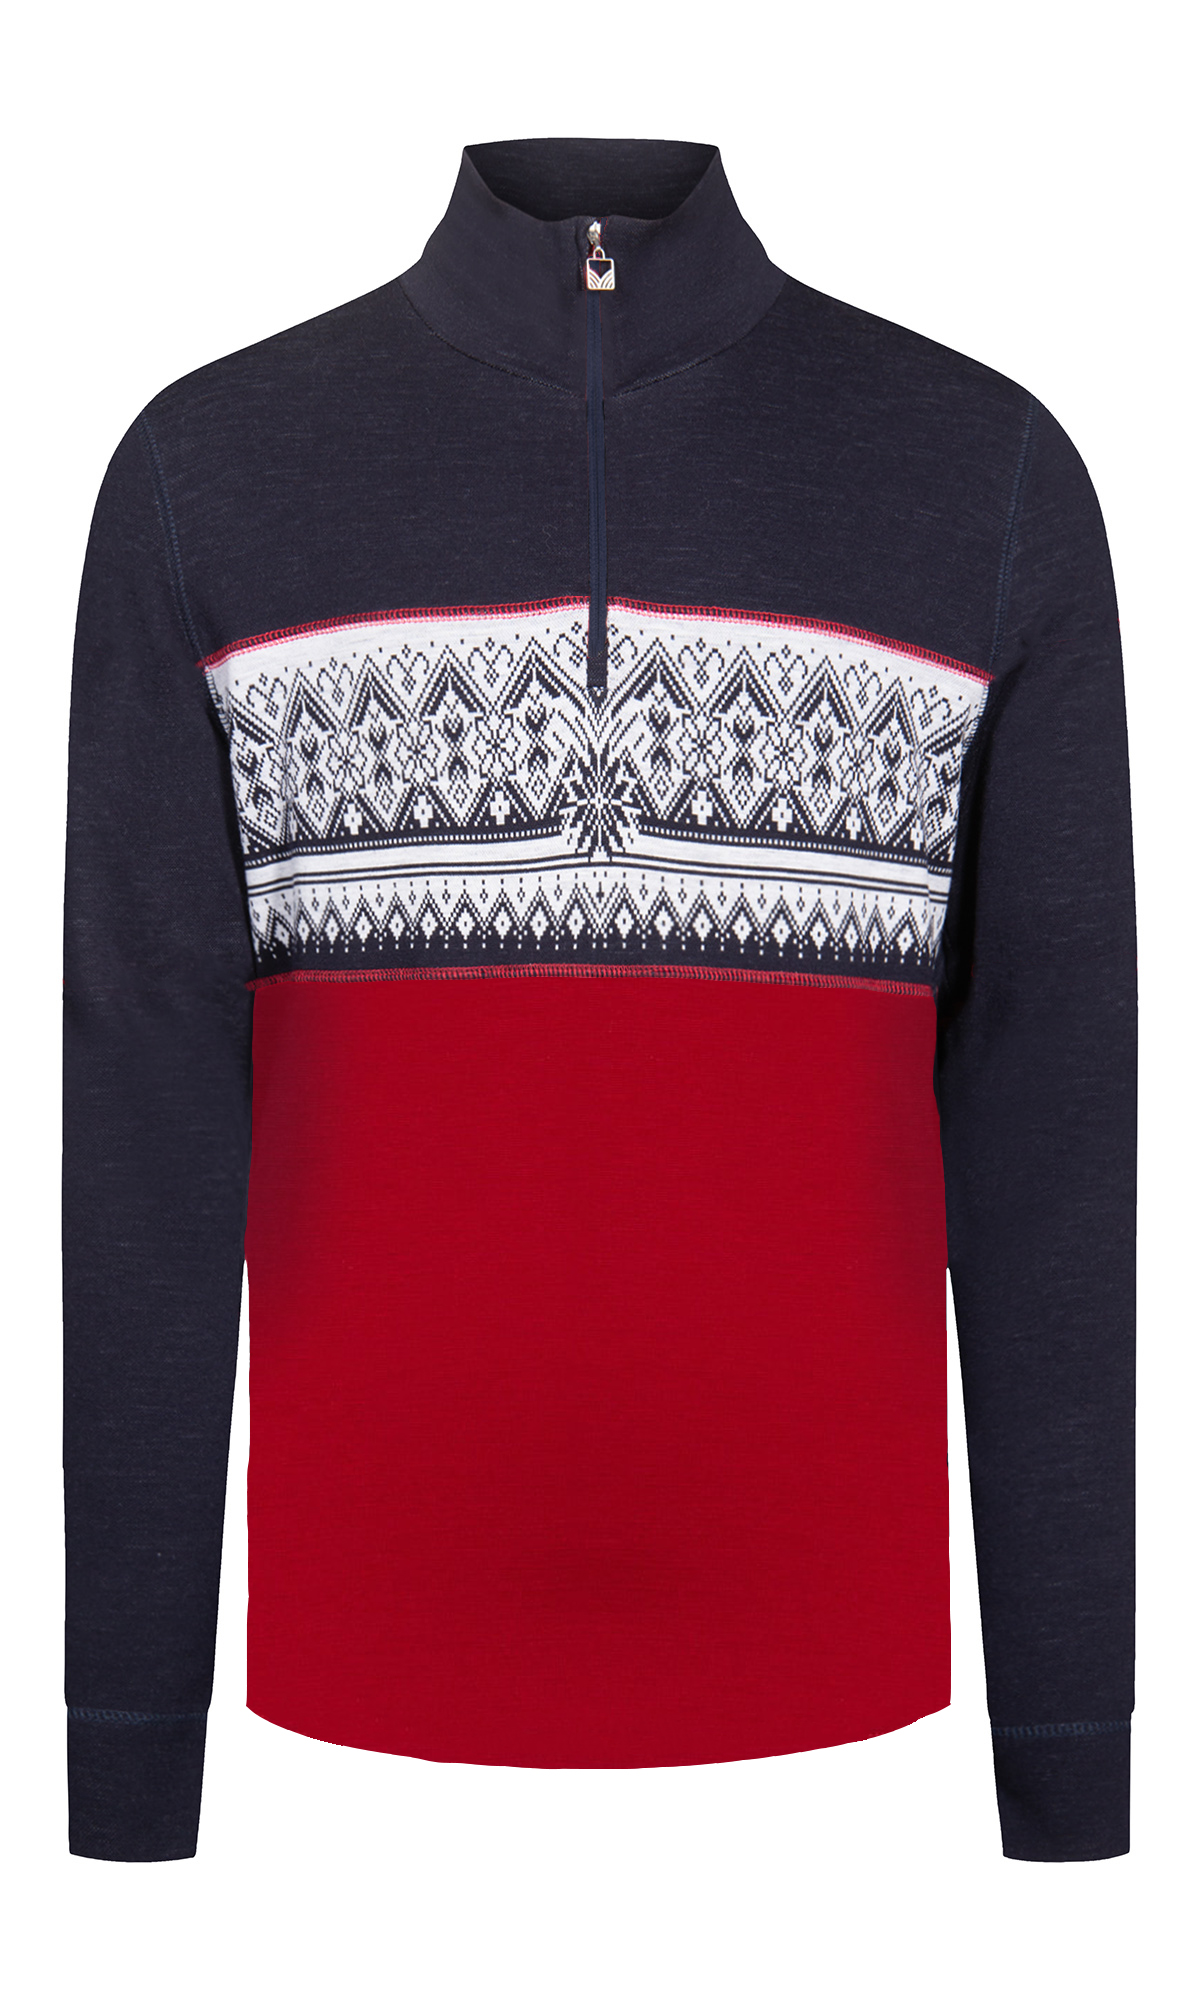 Mens extra fine 100% merino wool quarter zip sweater jumper SALE!!!! Large 